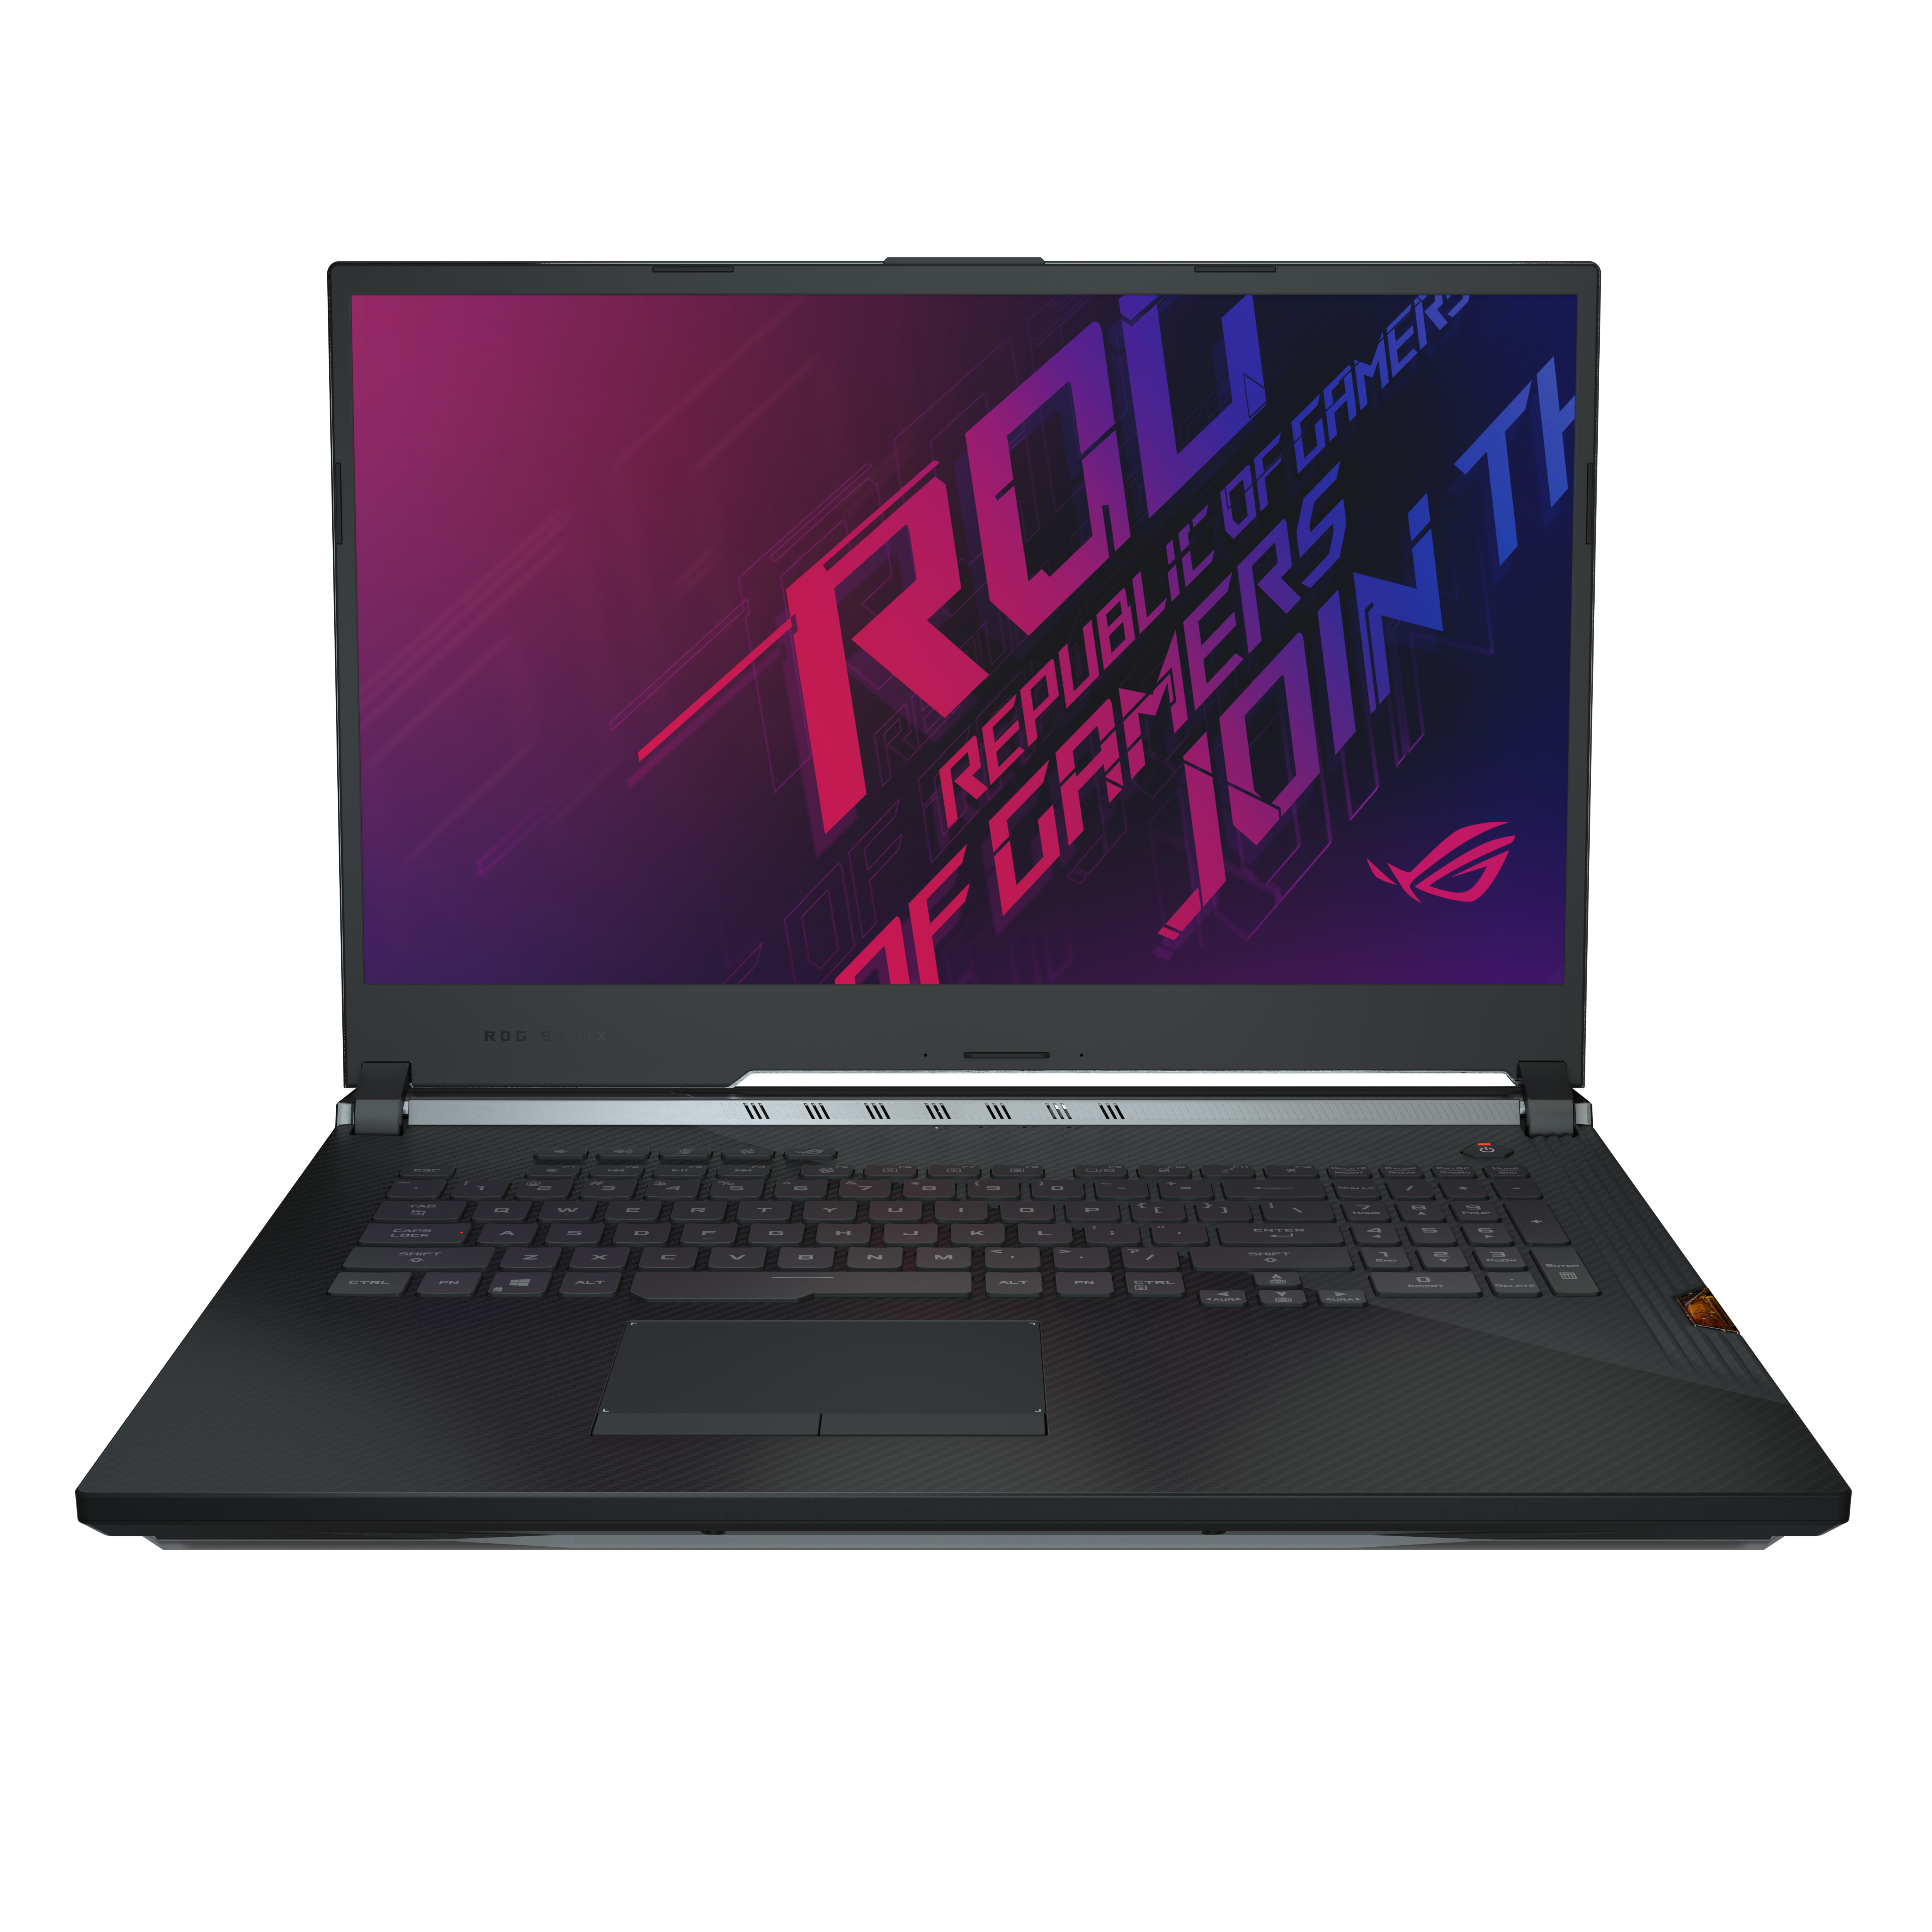 ASUS ROG Strix Scar Edi Tion G731GW-H6170T Gaming Laptop i7-9750H/16GB/1TB HDD + 512GB SSD/GeForce RTX 2070 16GB40Hz/Windows 10/Gun Metal